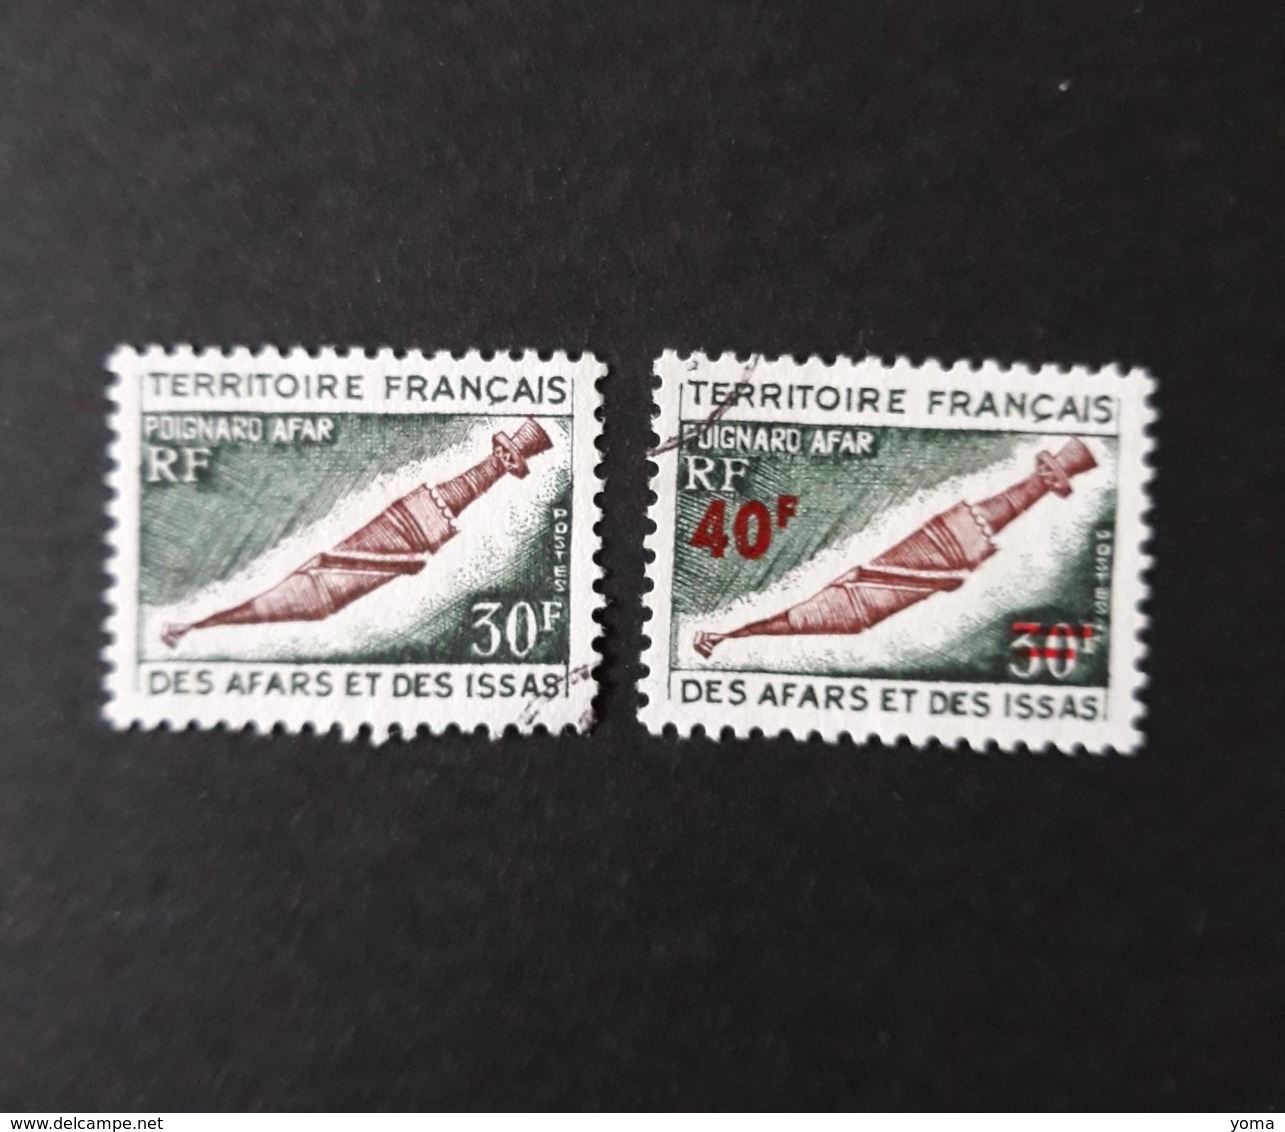 N° 383 Et 393        Poignard Afar - Used Stamps